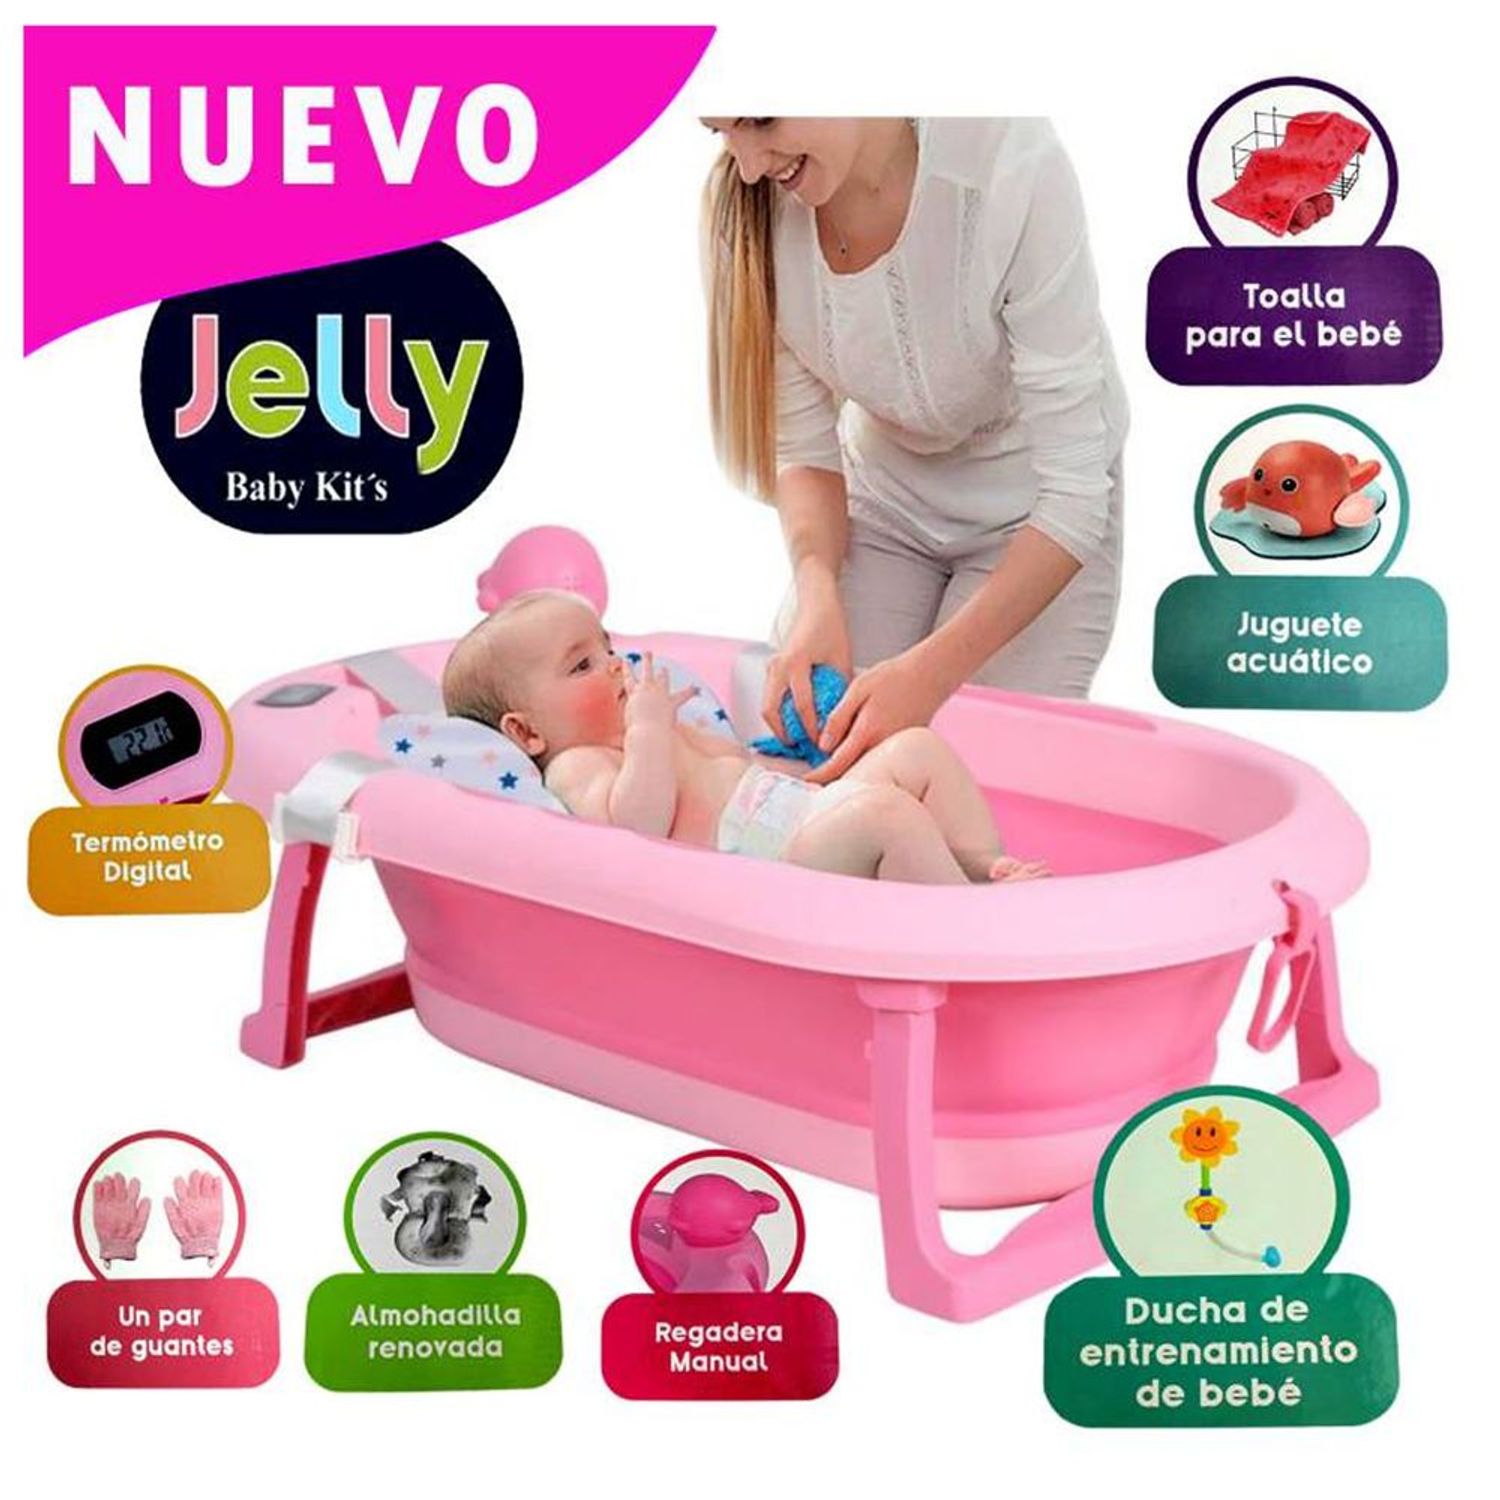 Kit de Aseo para Bebe Recien Nacido I Oechsle - Oechsle